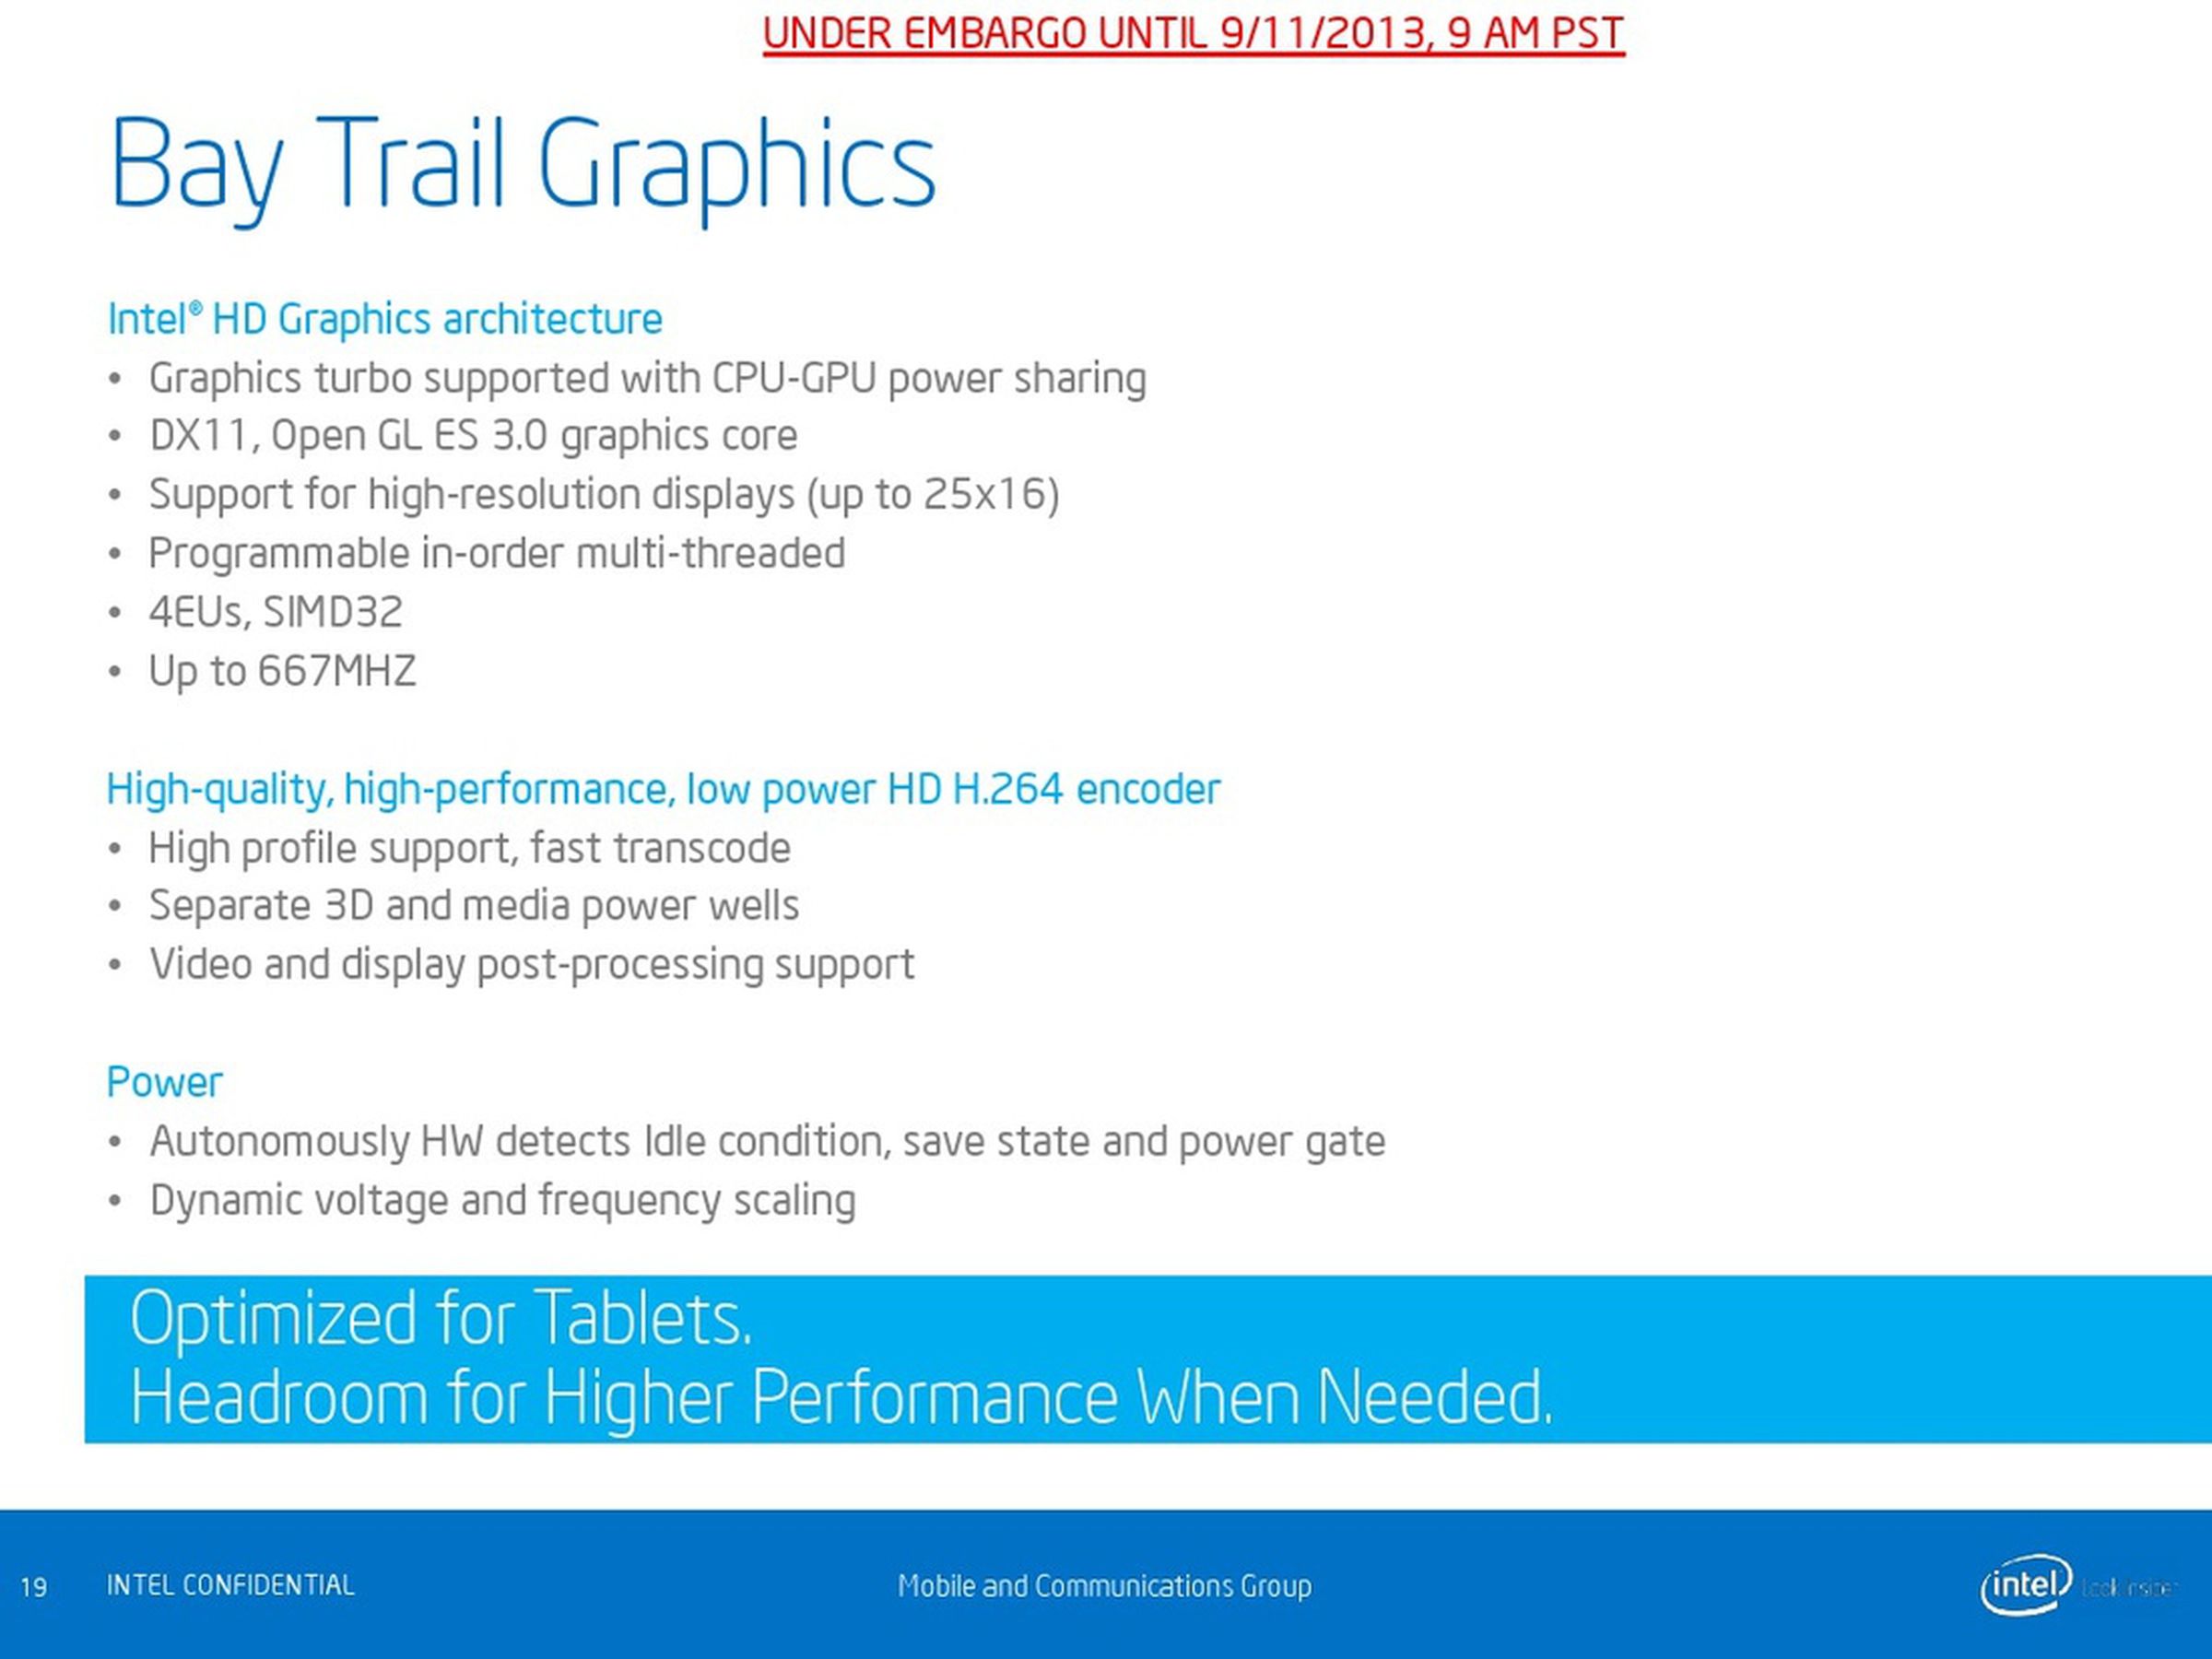 Intel Bay Trail slide deck